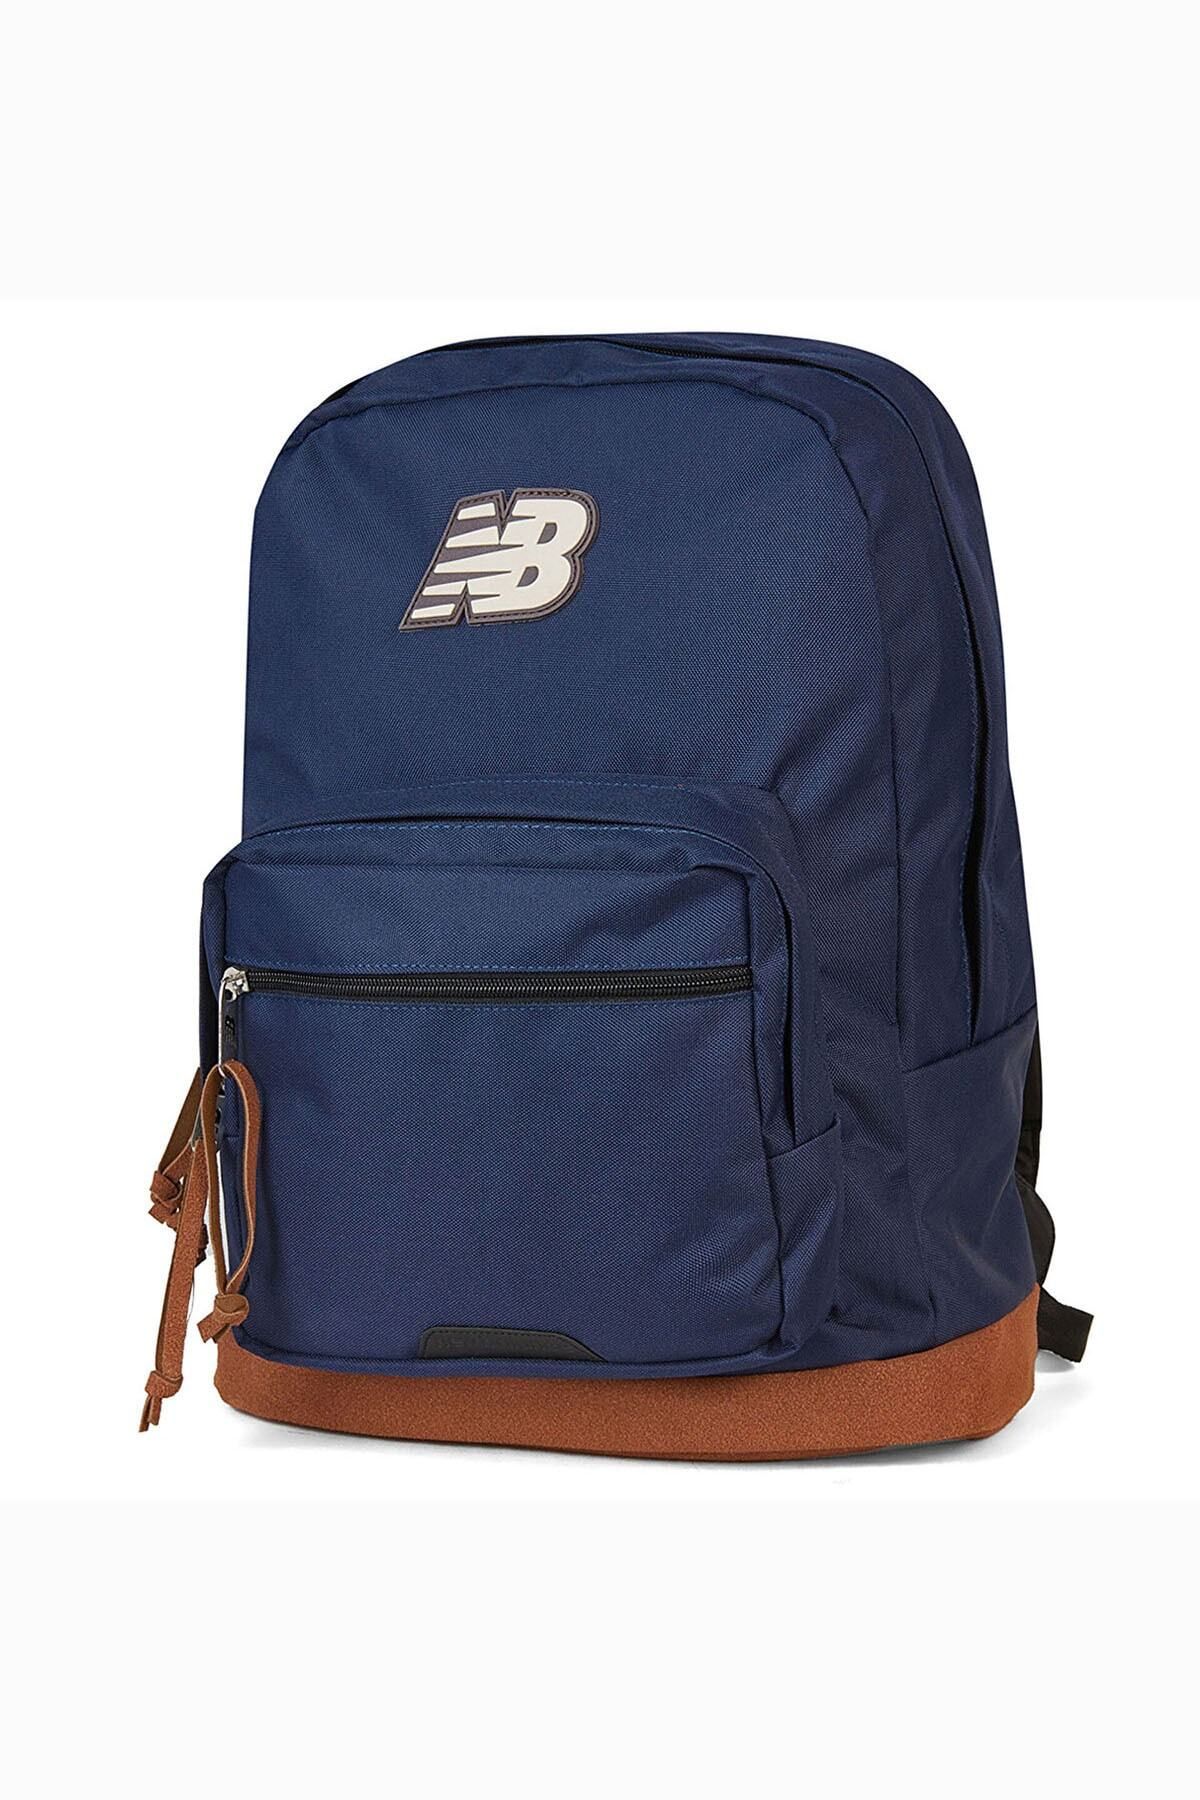 New Balance Çanta Nb Backpack Anb3202-avı